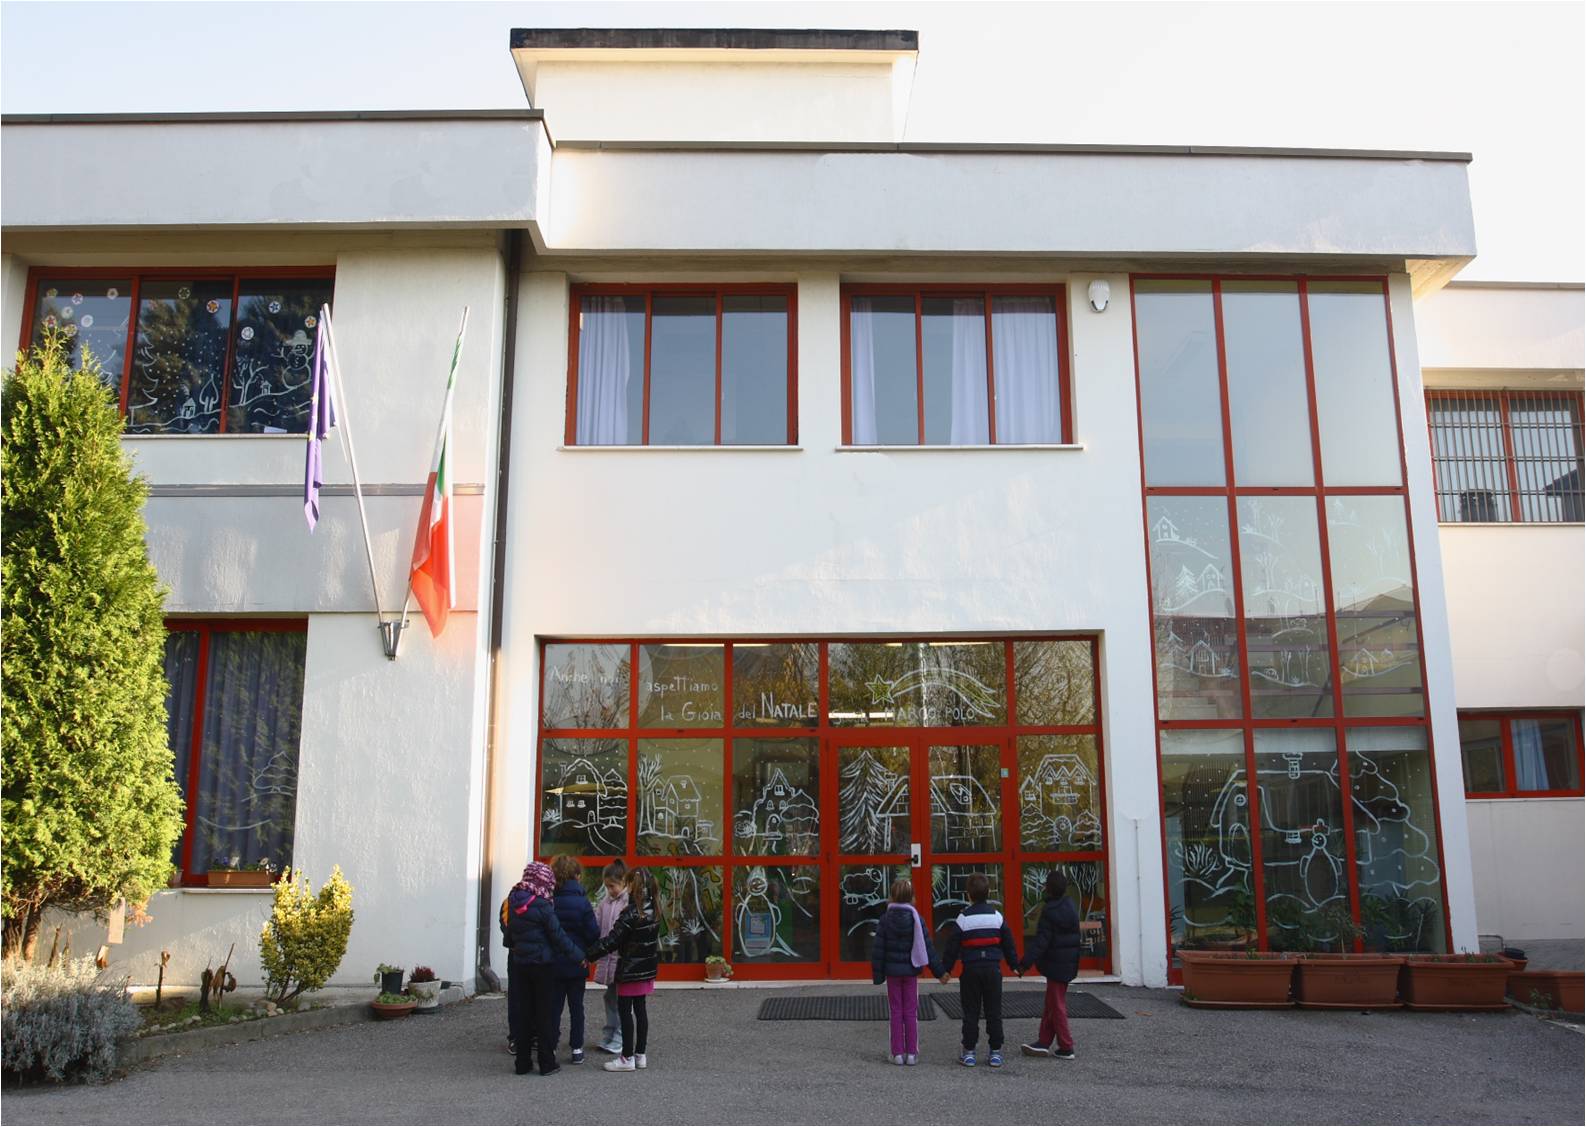 Scuola Primaria Marco Polo, ingresso